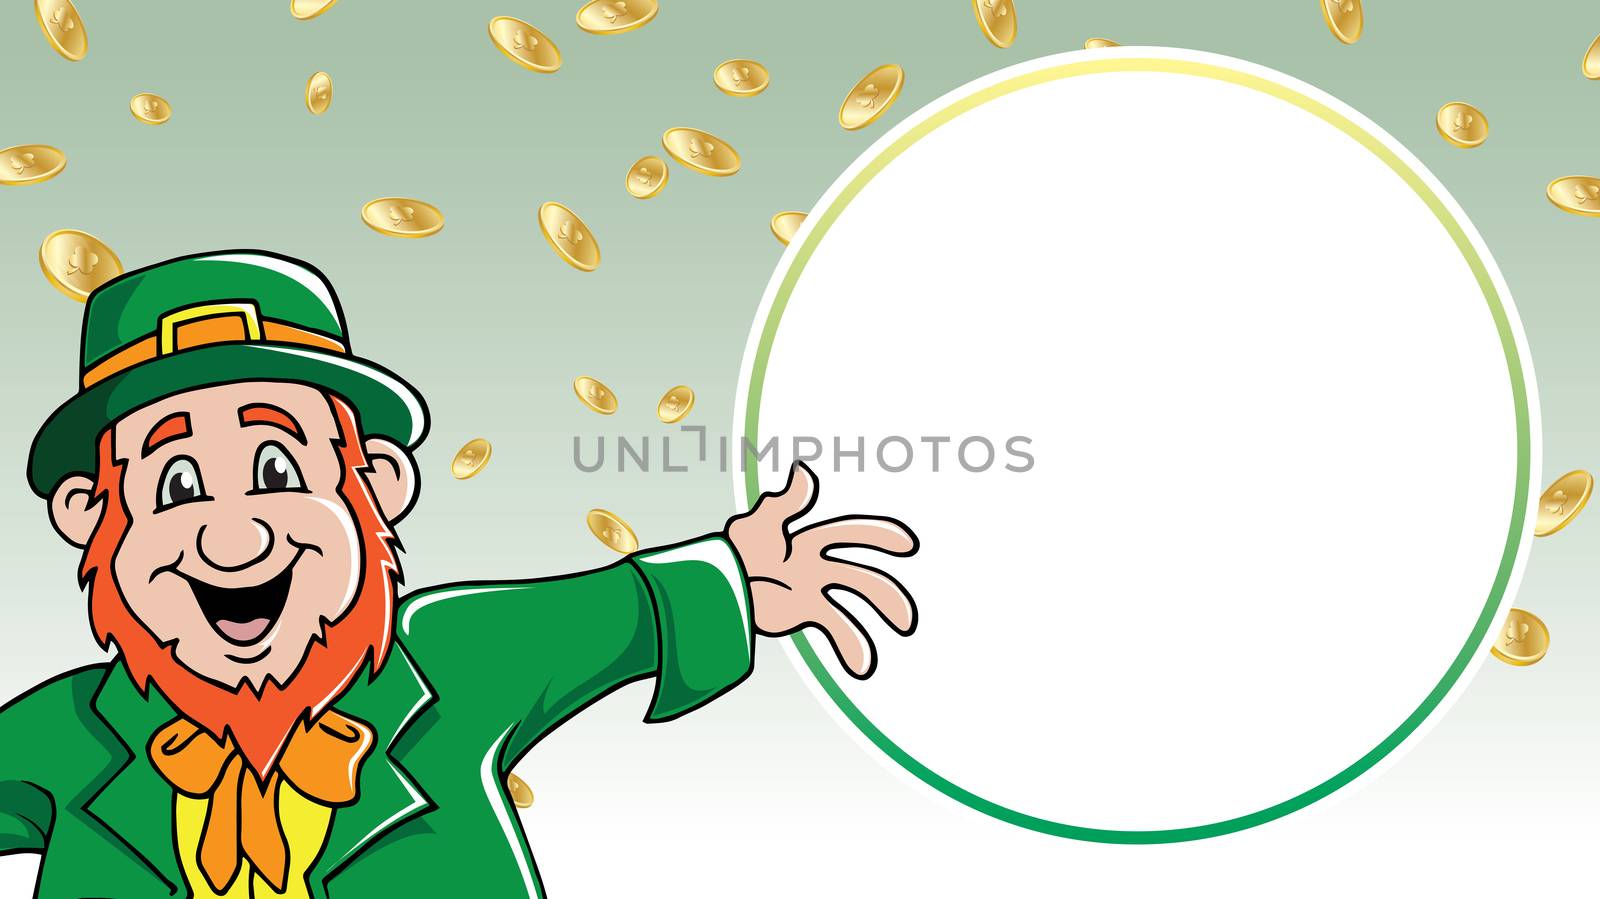 Saint Patrick's Day leprechaun shouting message among gold coins by illstudio